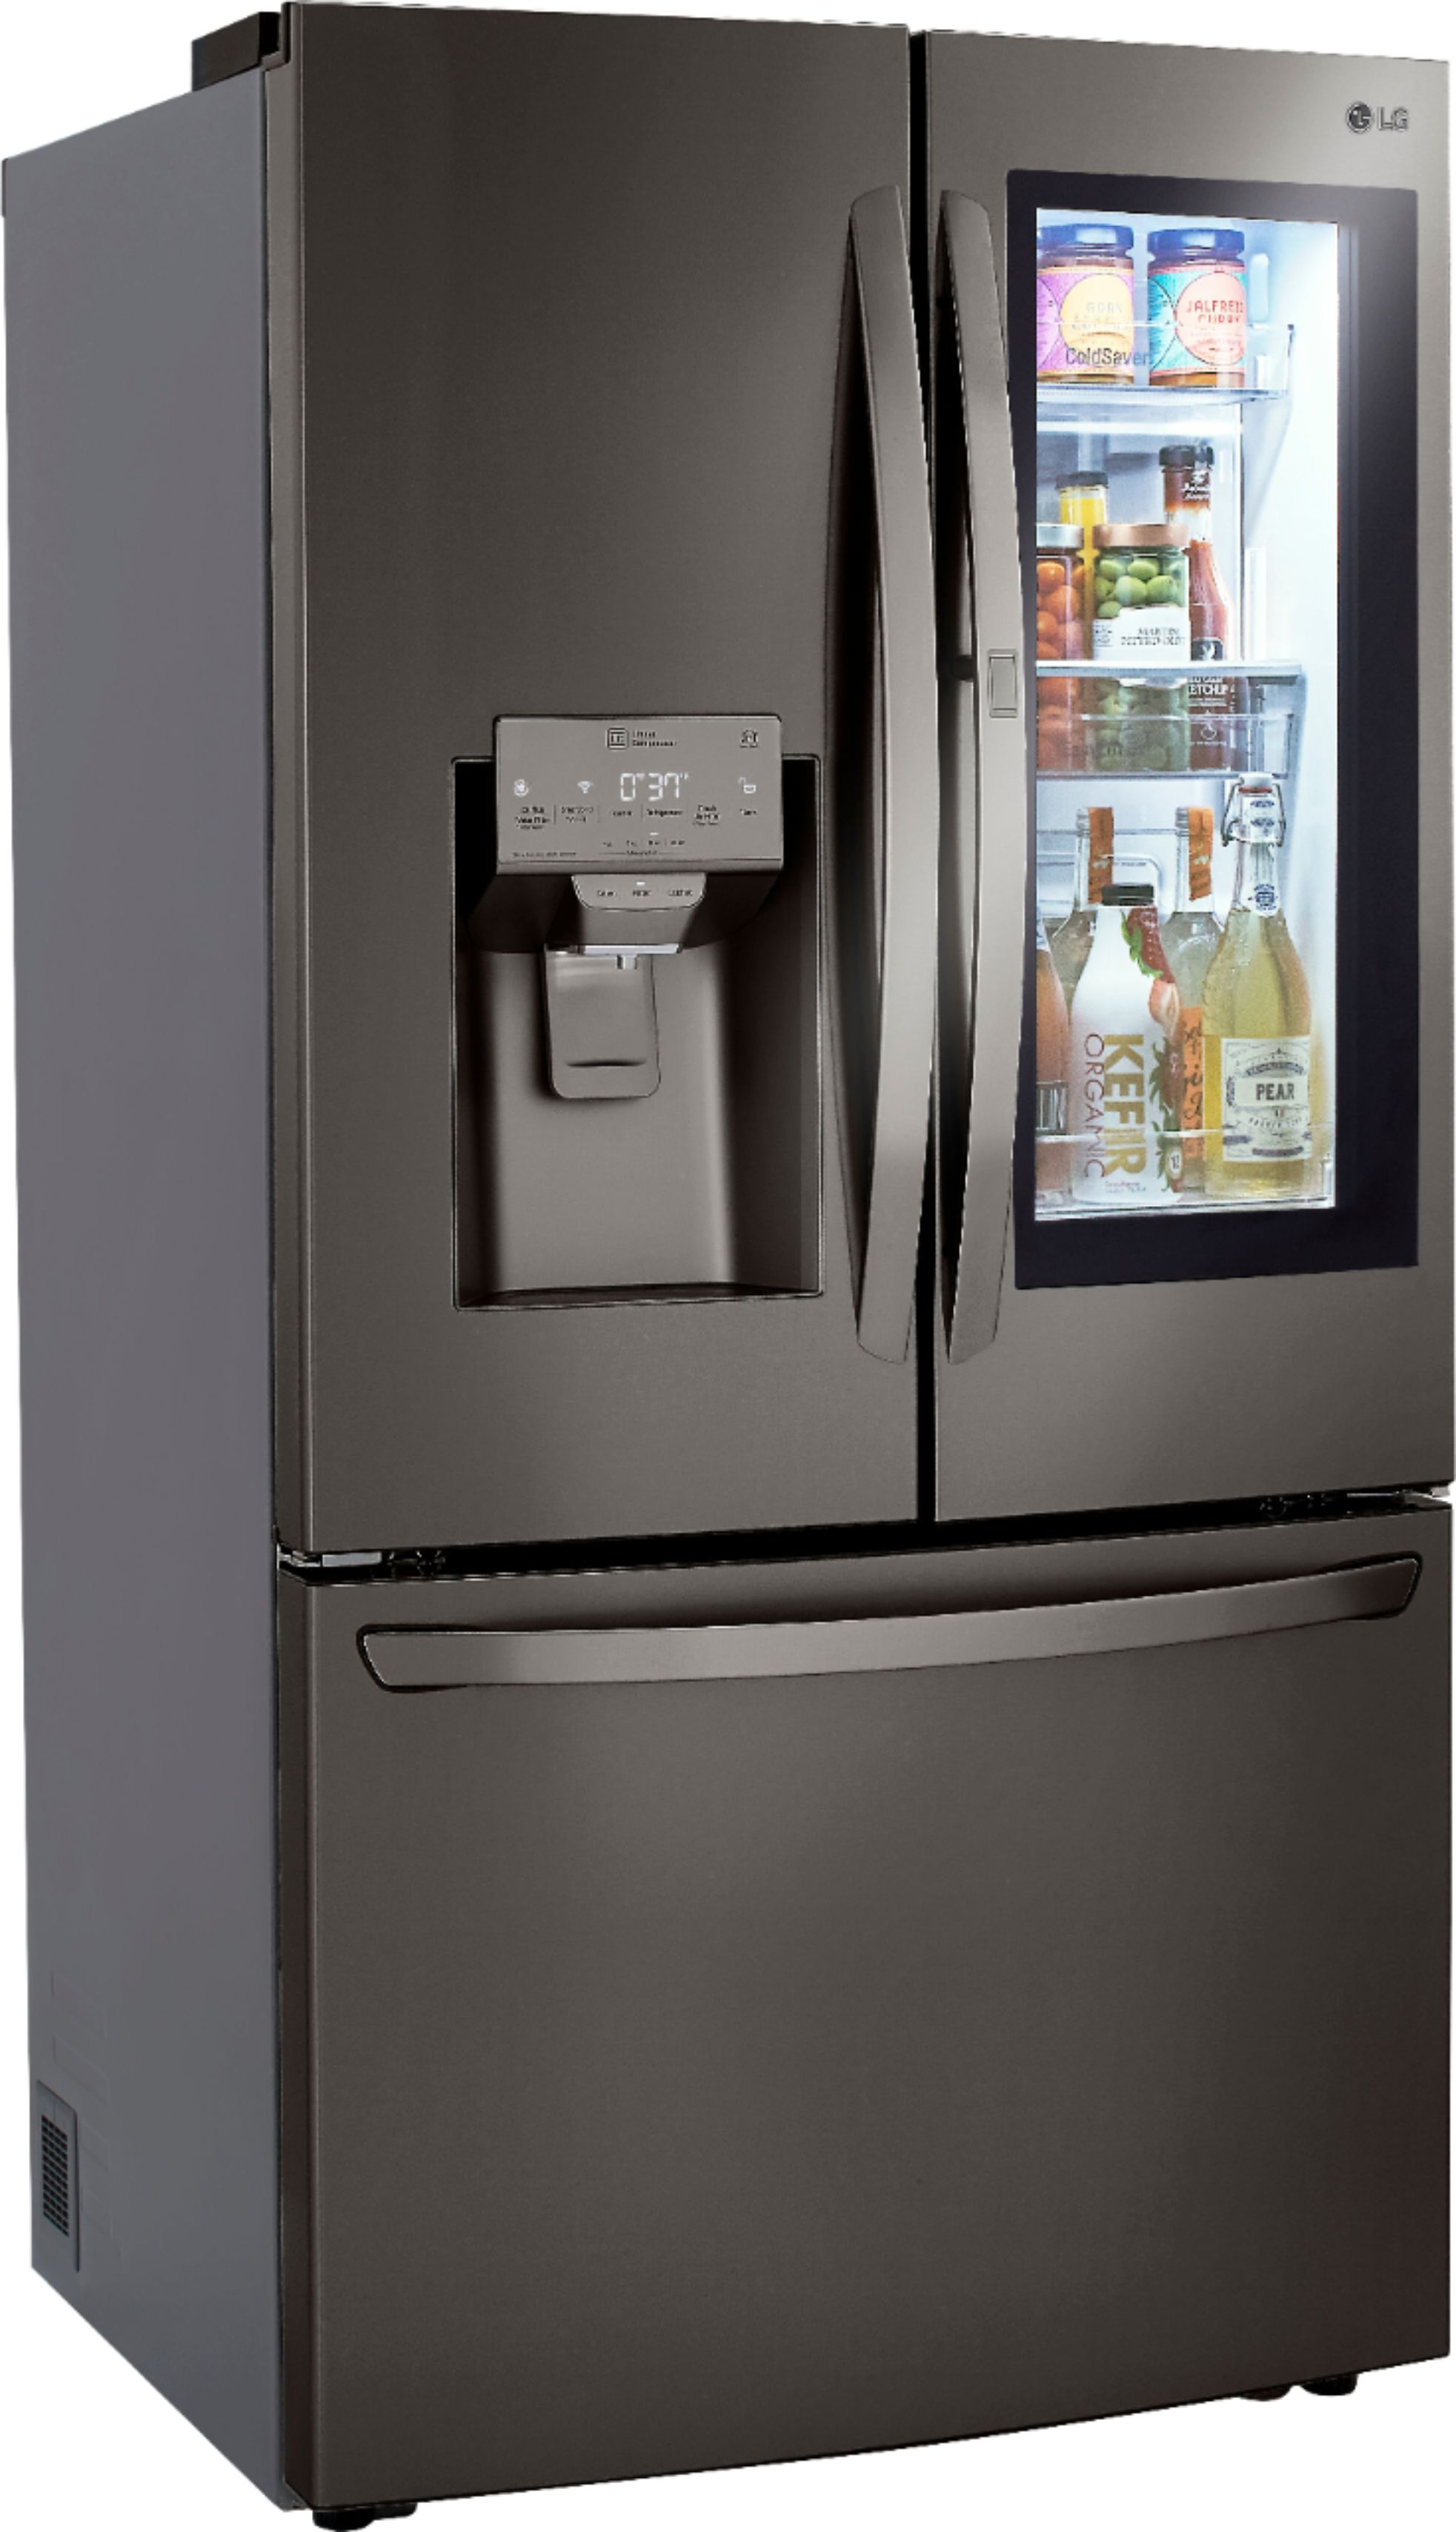 32++ Lg lrfvs3006s refrigerator reviews information